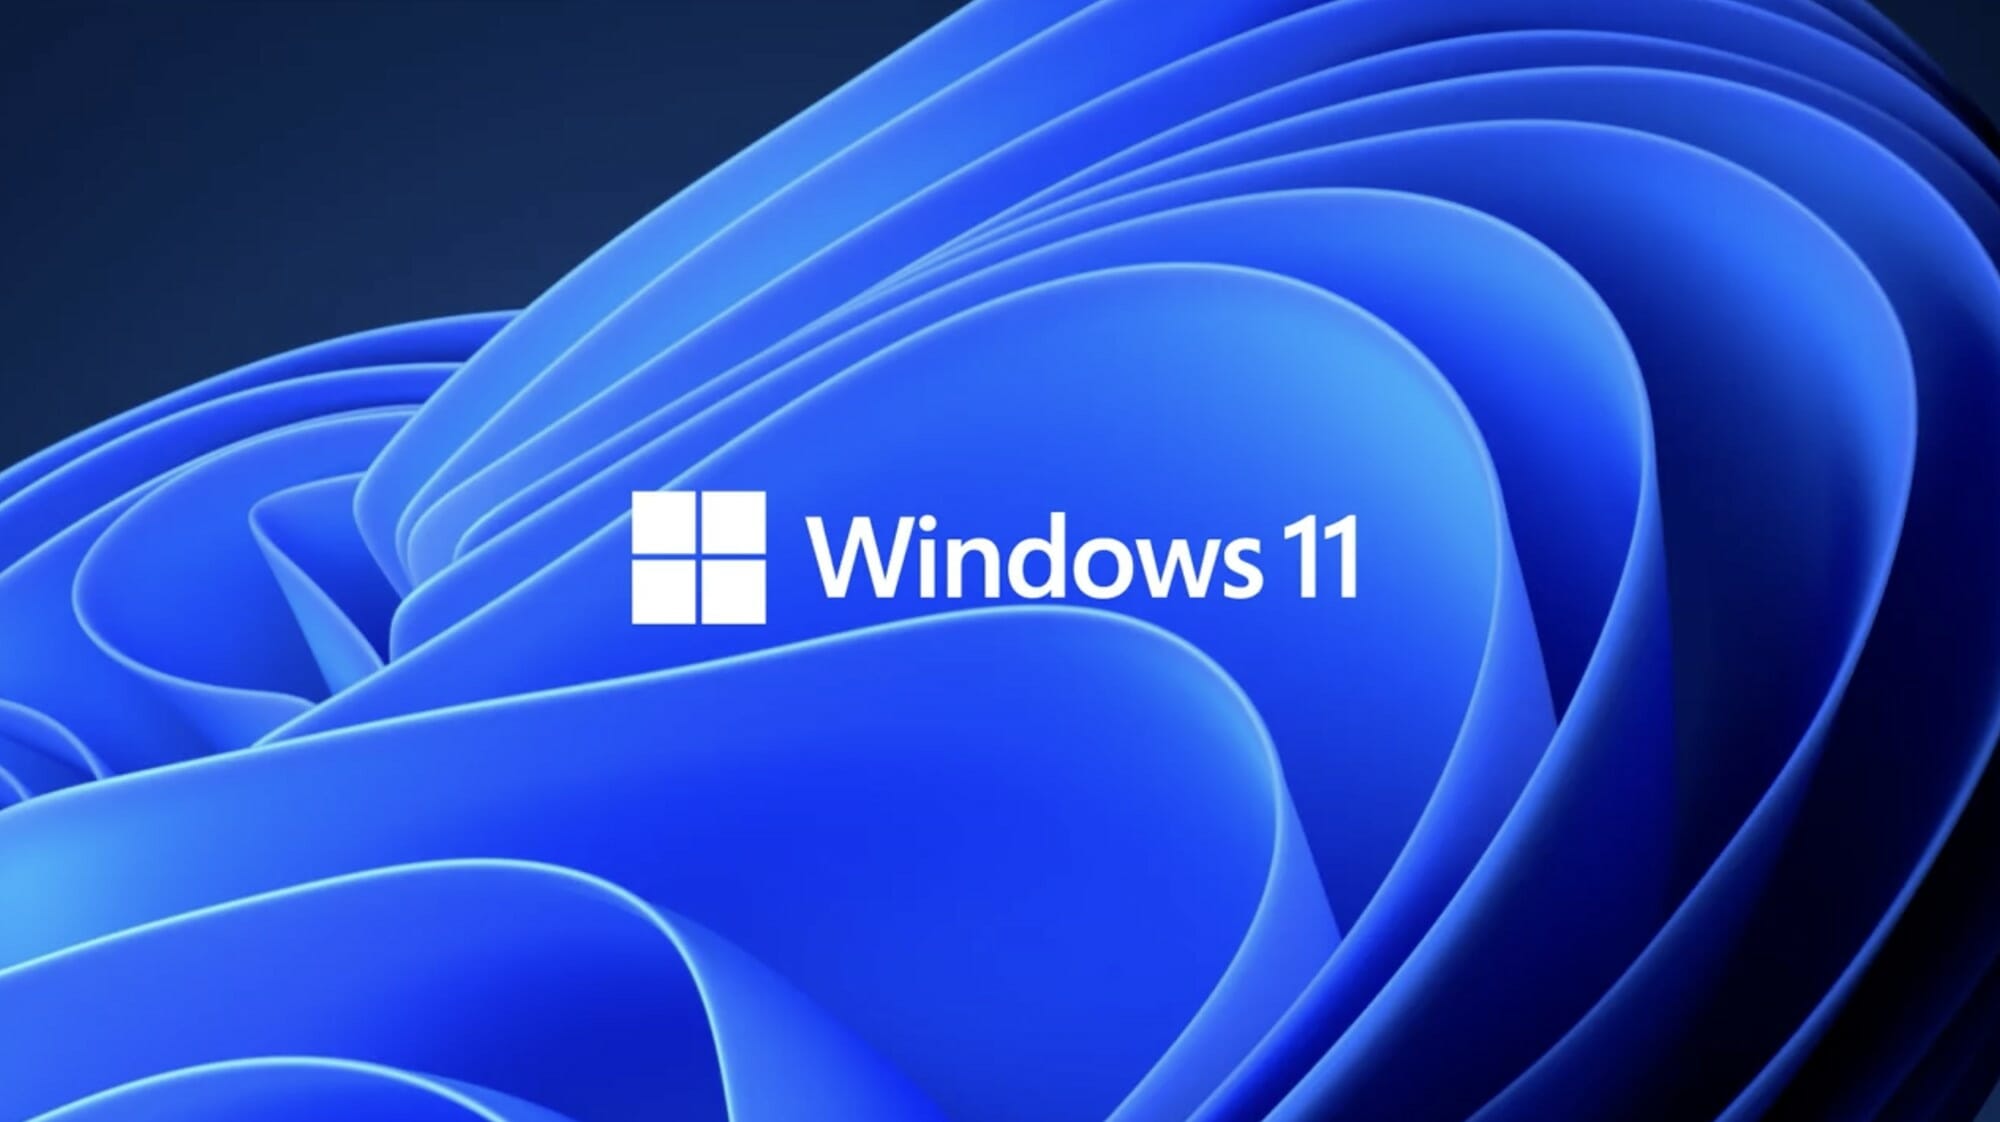 Windows 11 Wallpaper 4K 11 wallpaper download 2021. windows 11 official